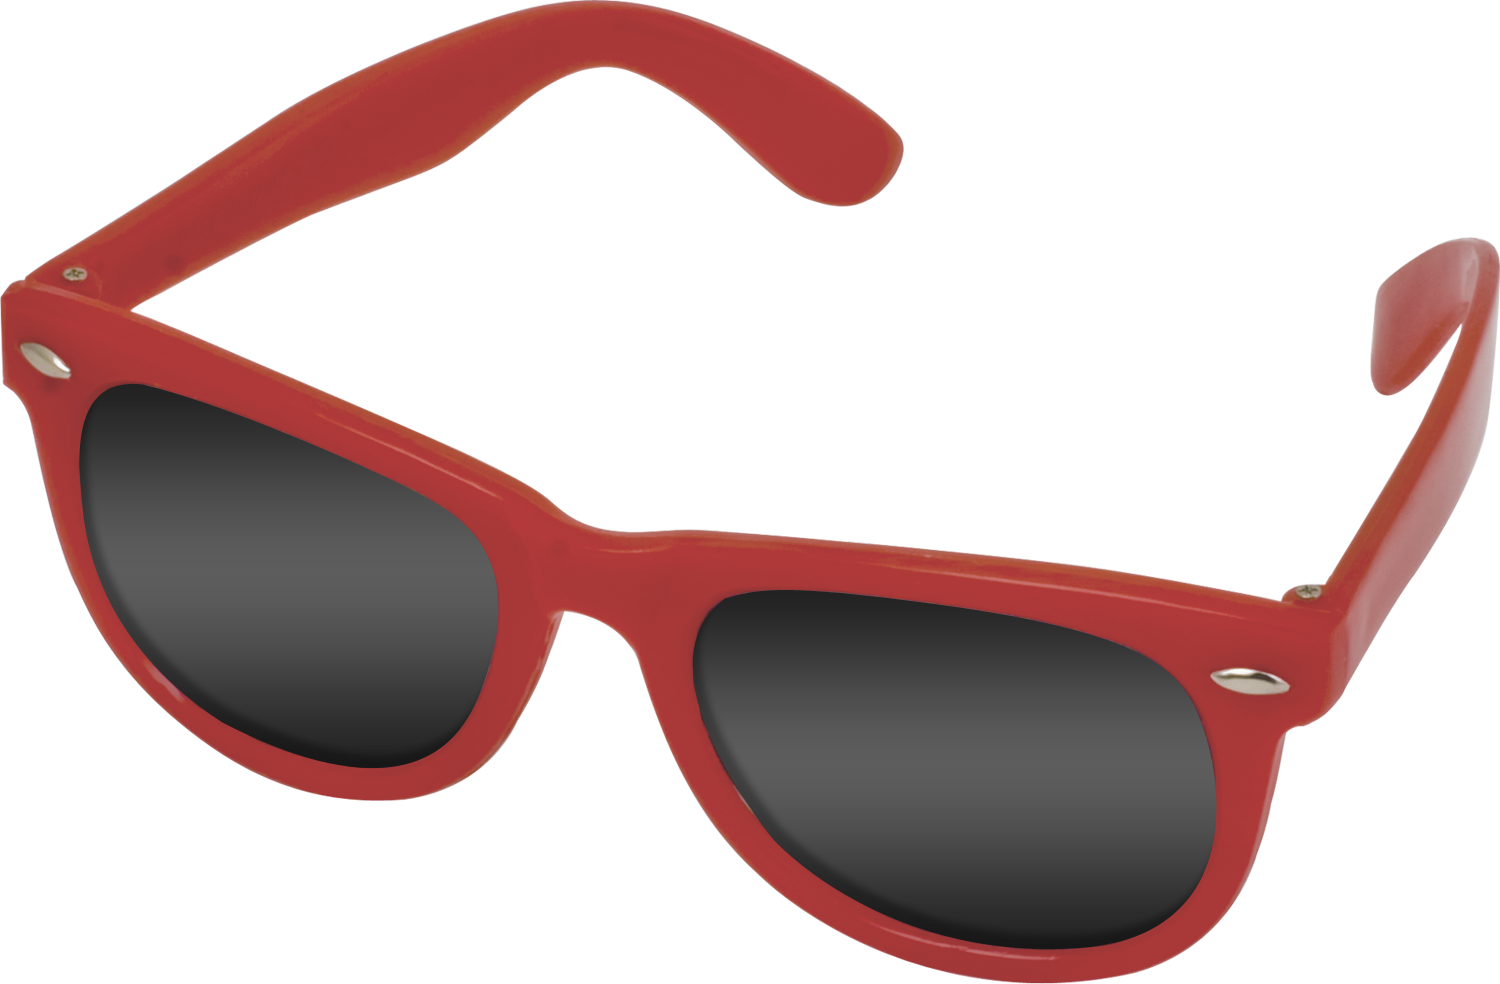 Sunglasses Transparent File